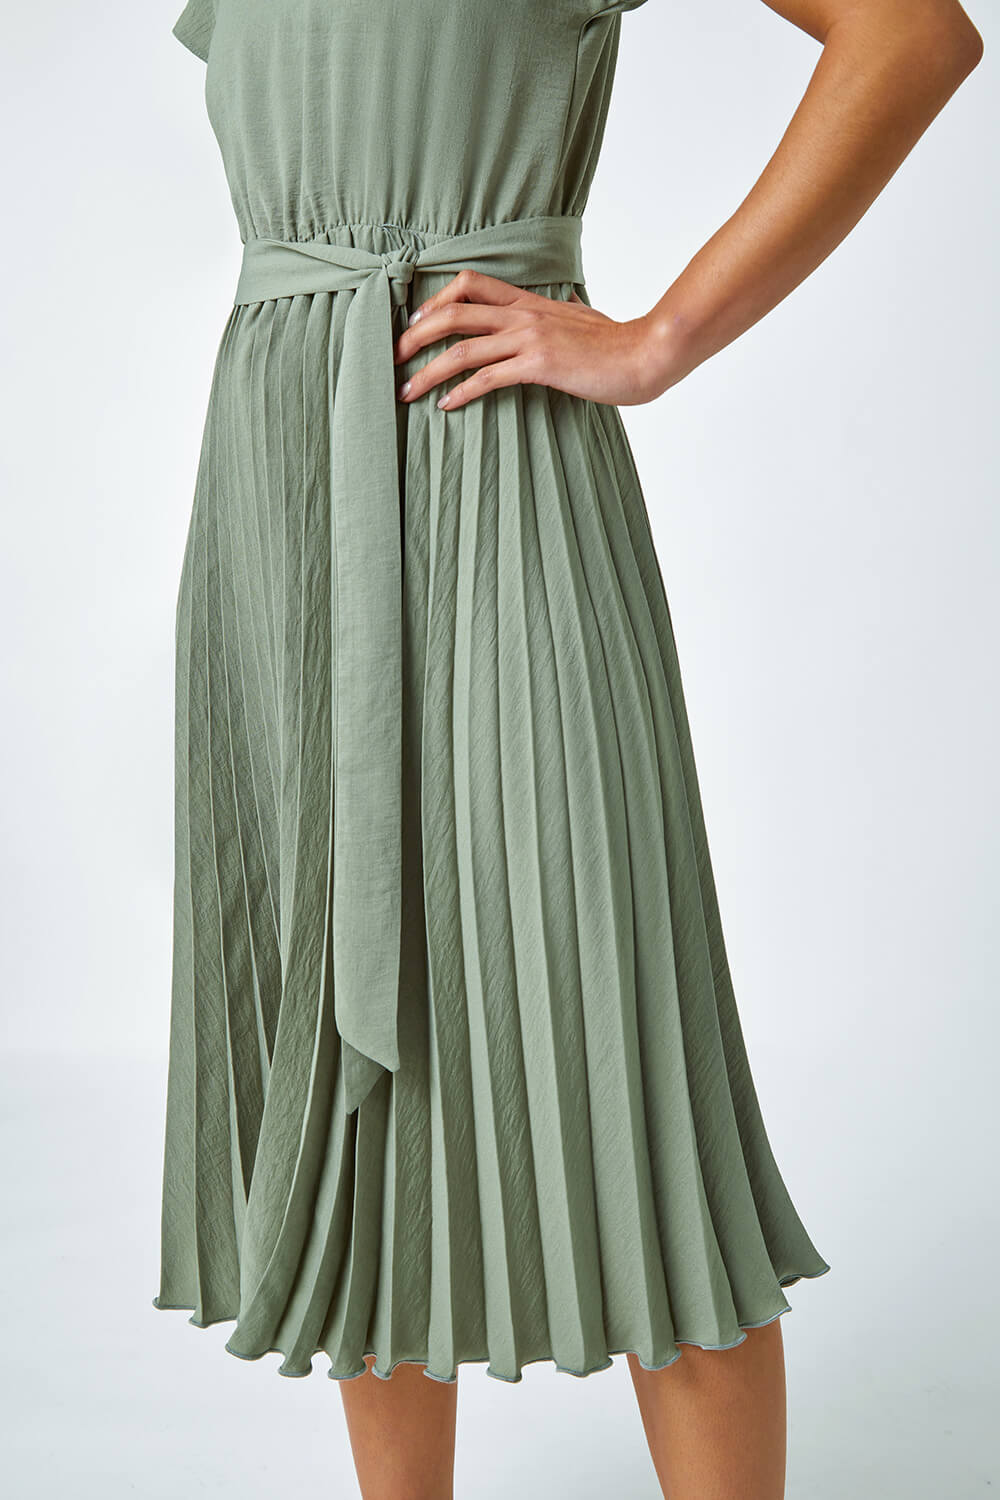 KHAKI Petite Plain Pleated Skirt Midi Dress, Image 5 of 5